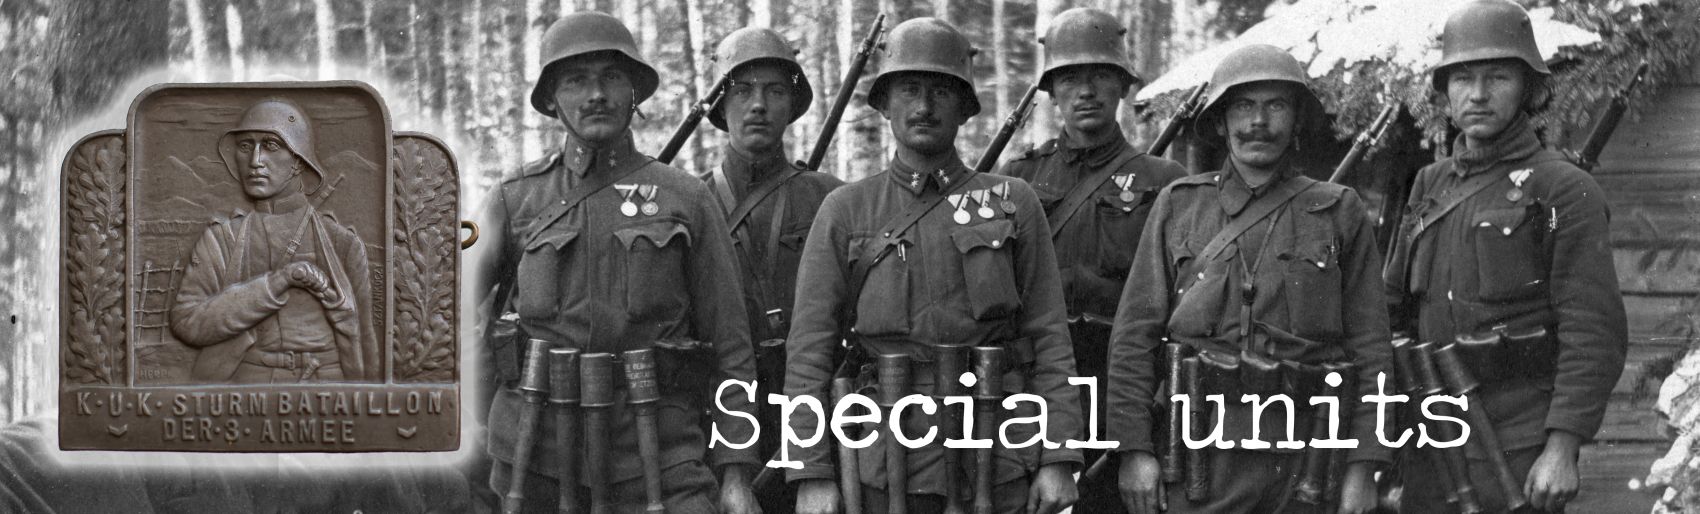 Special units